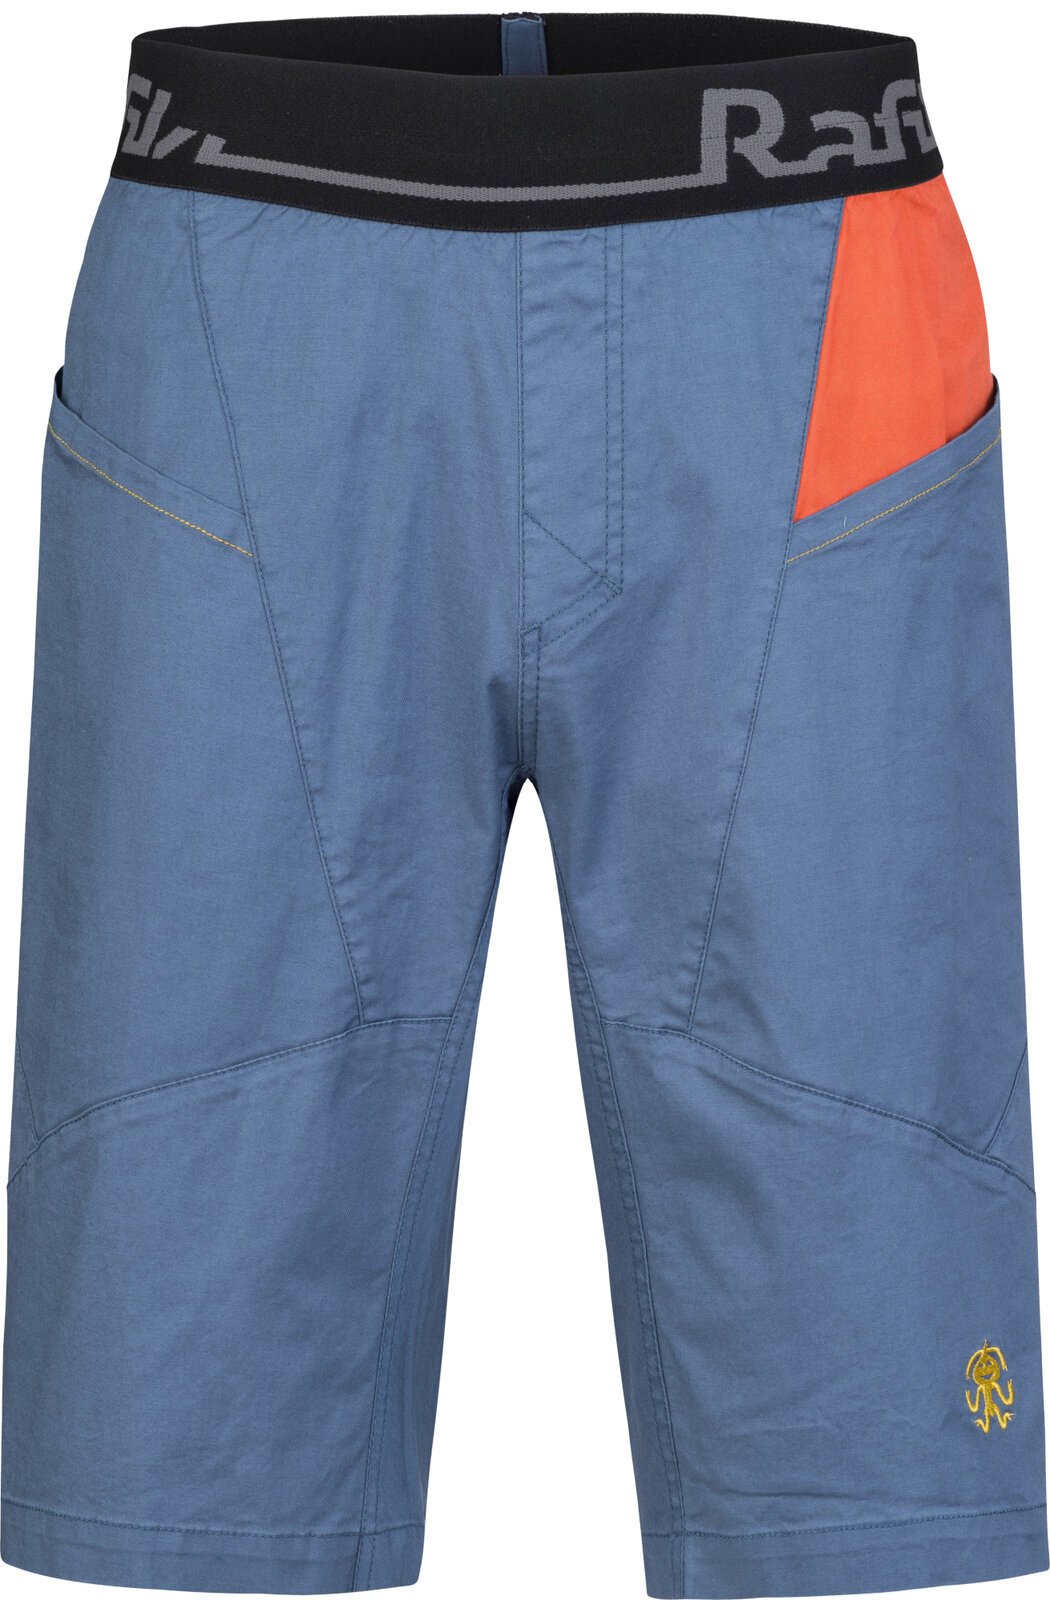 Friluftsliv shorts Rafiki Megos Man Shorts Ensign Blue/Clay S Friluftsliv shorts